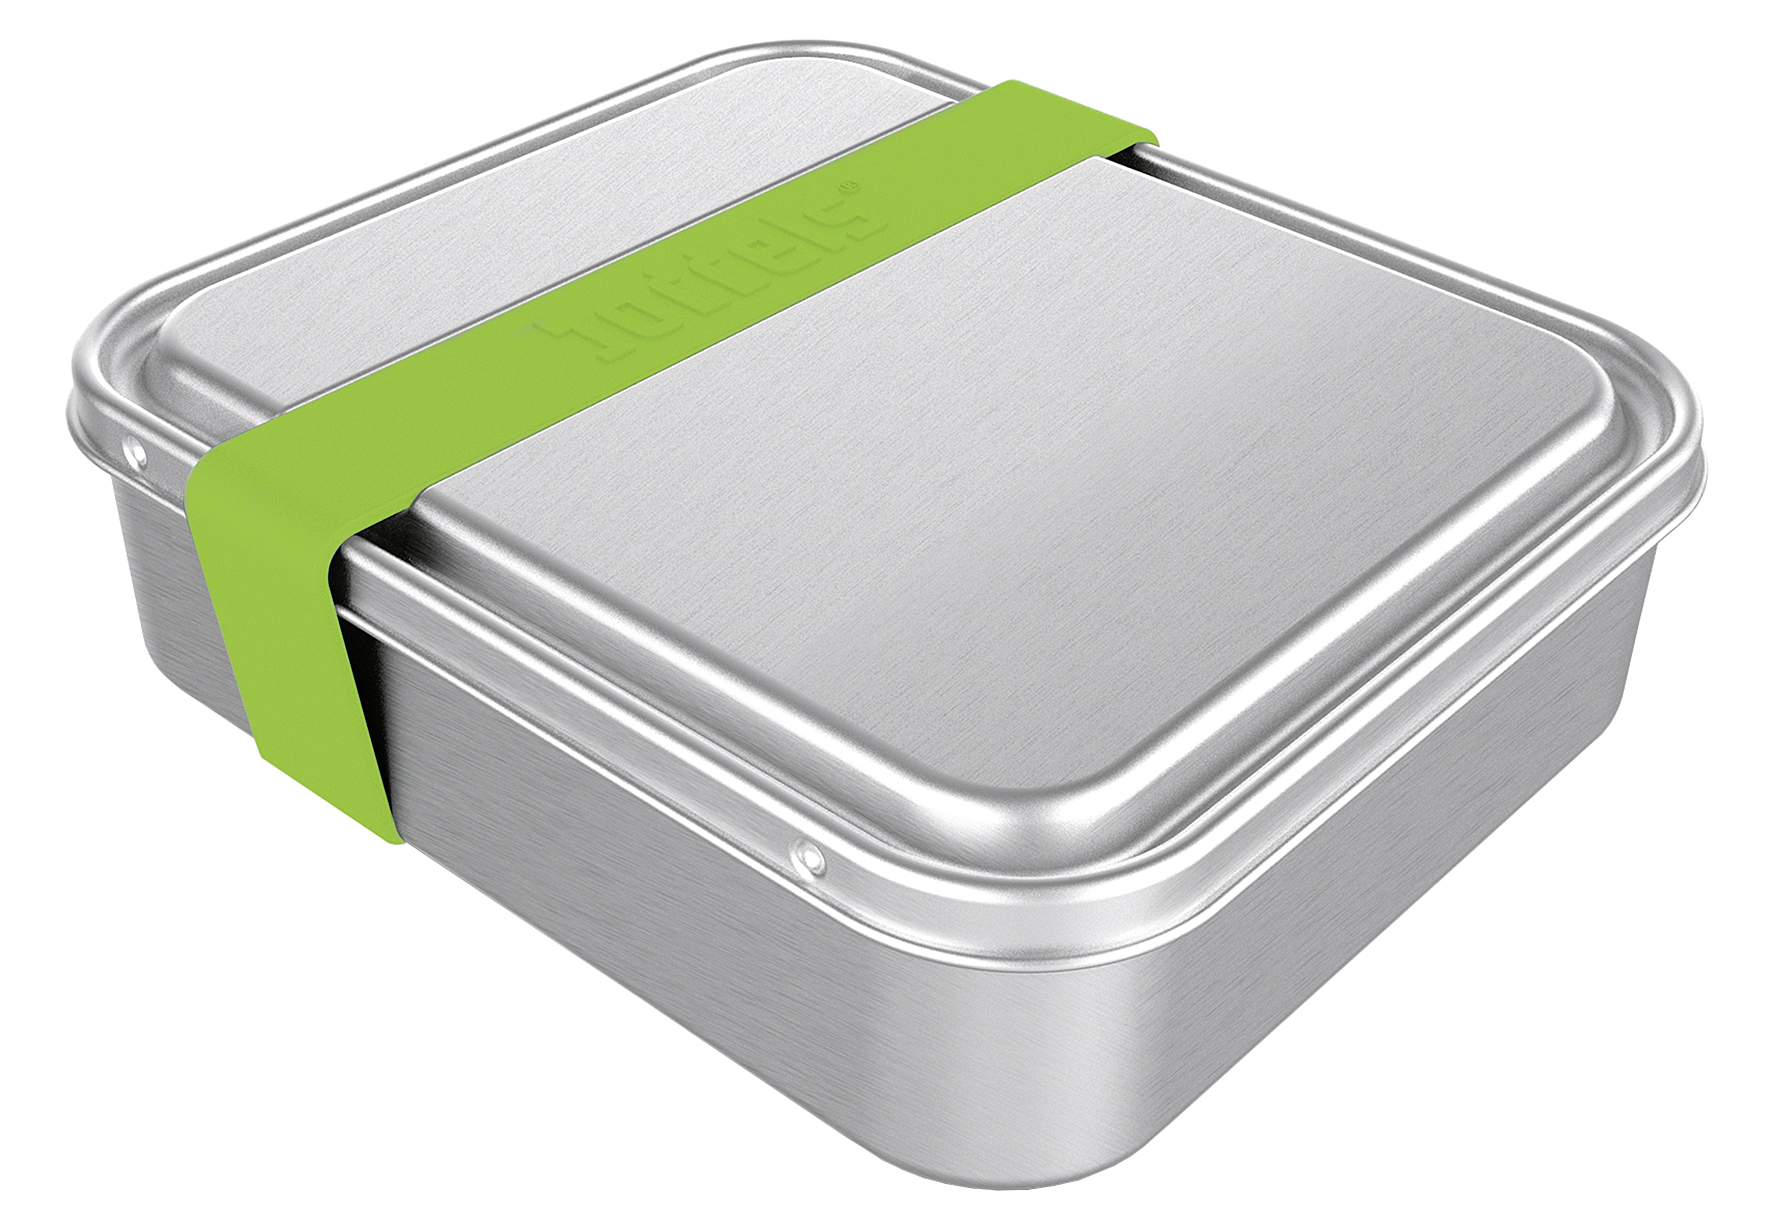 BODDELS Lunchbox/Brotdose SMACHT 800ml apfelgrün